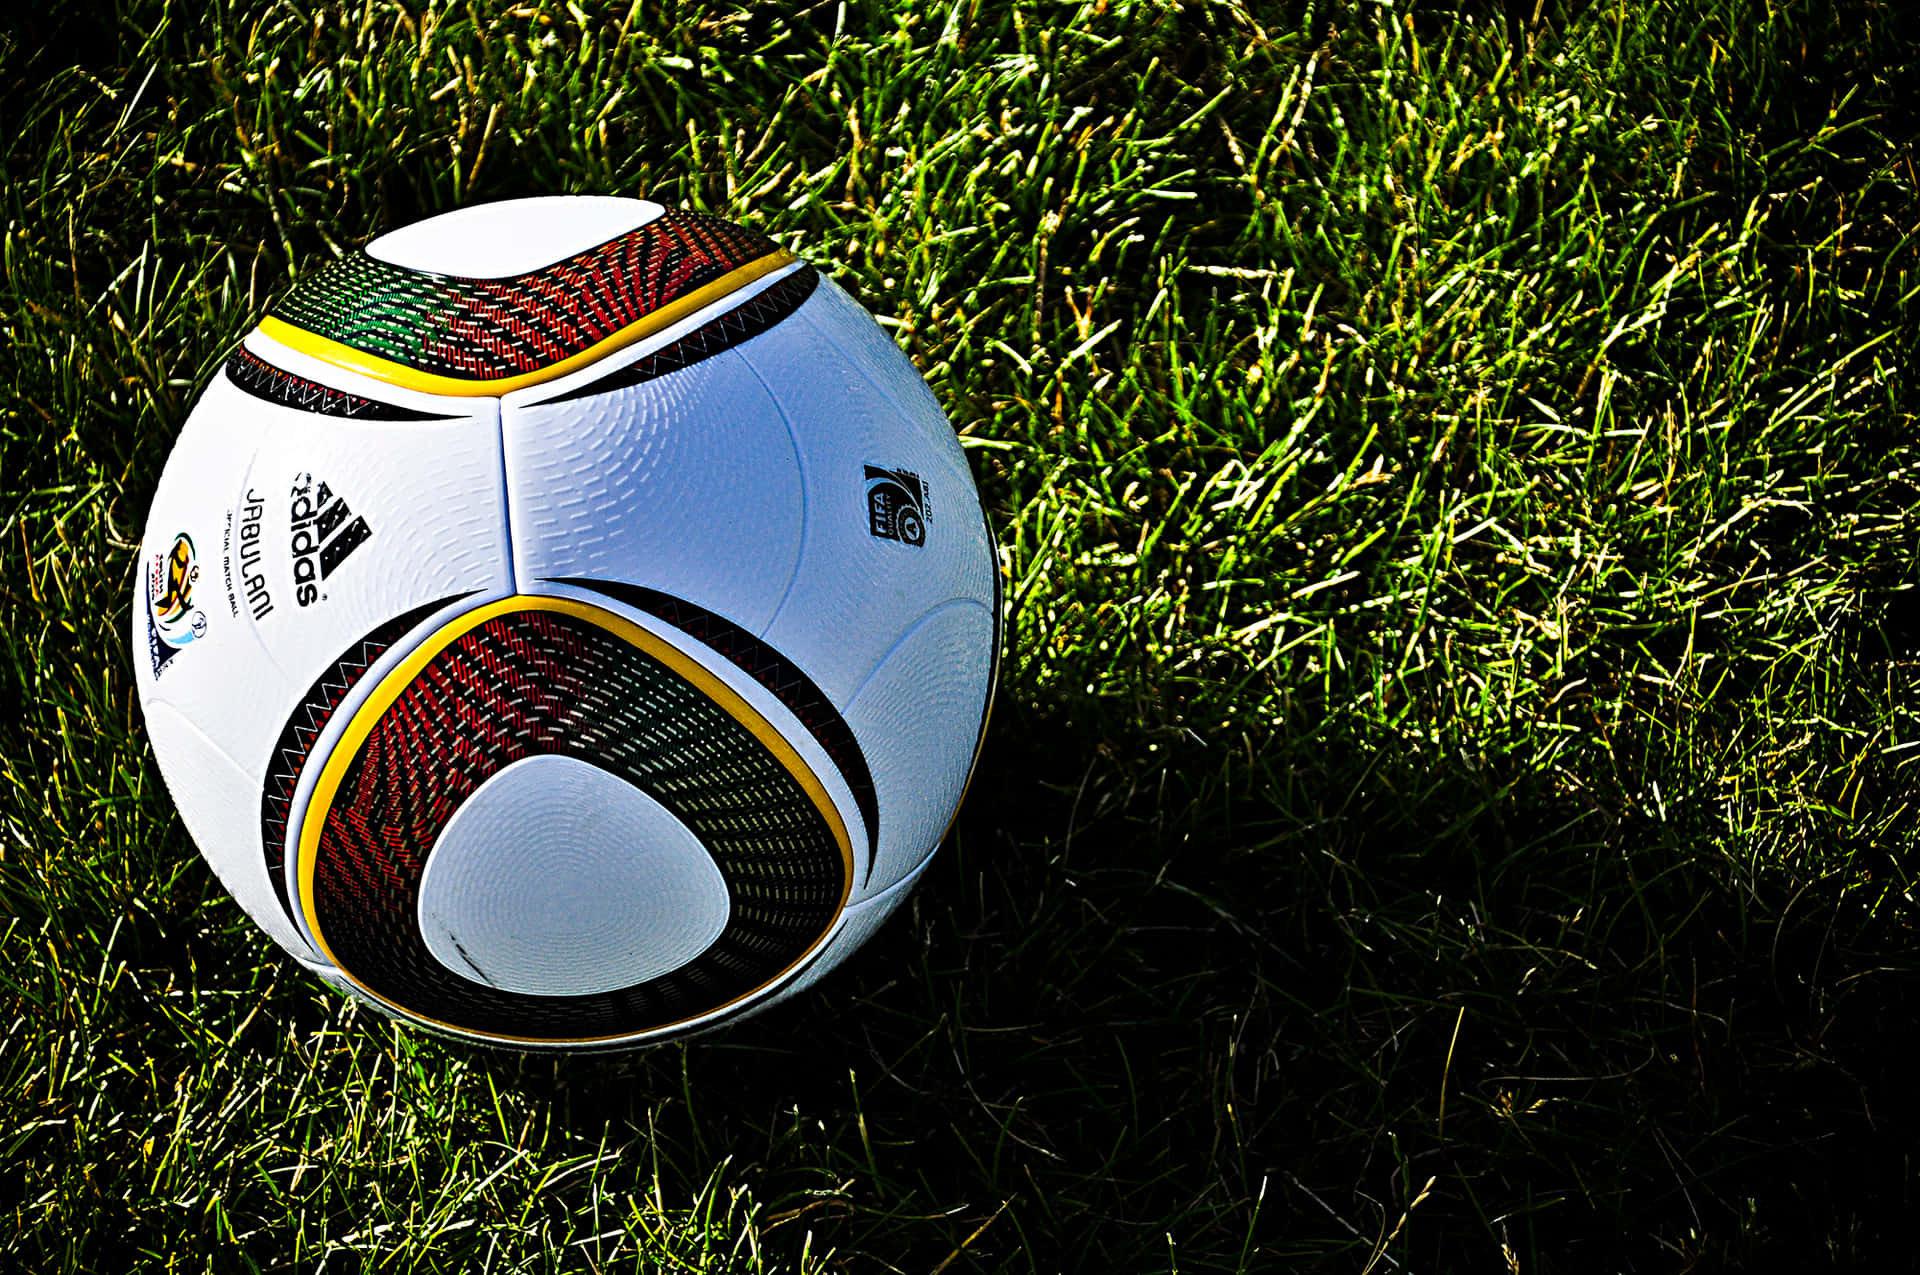 A Soccer Ball On The Grass